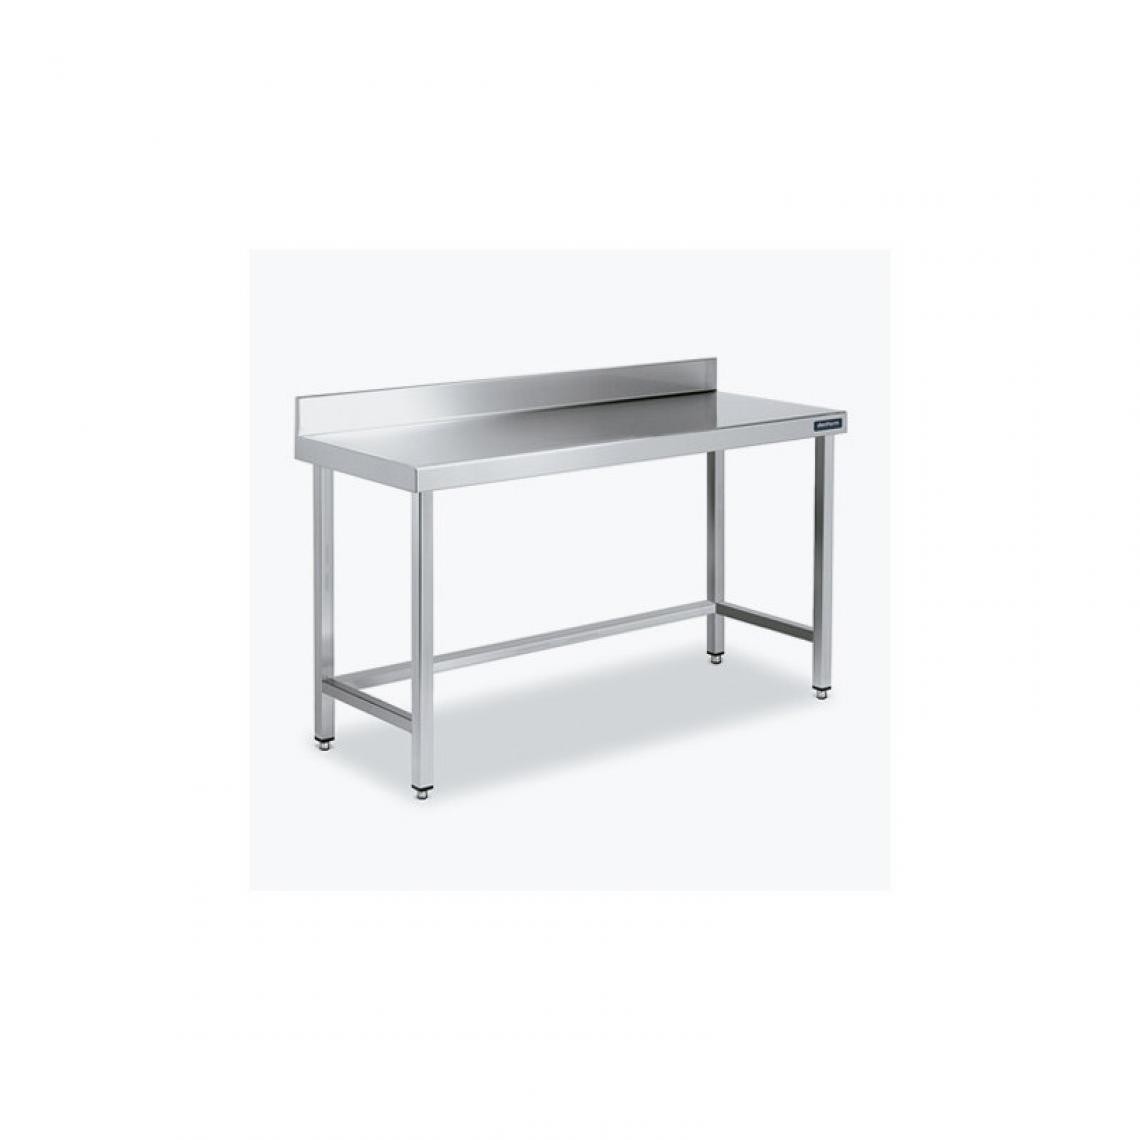 DISTFORM - Table Adossée 600x500 avec Renforts - Distform - Inox 18/102200x500x850mm - Tables à manger